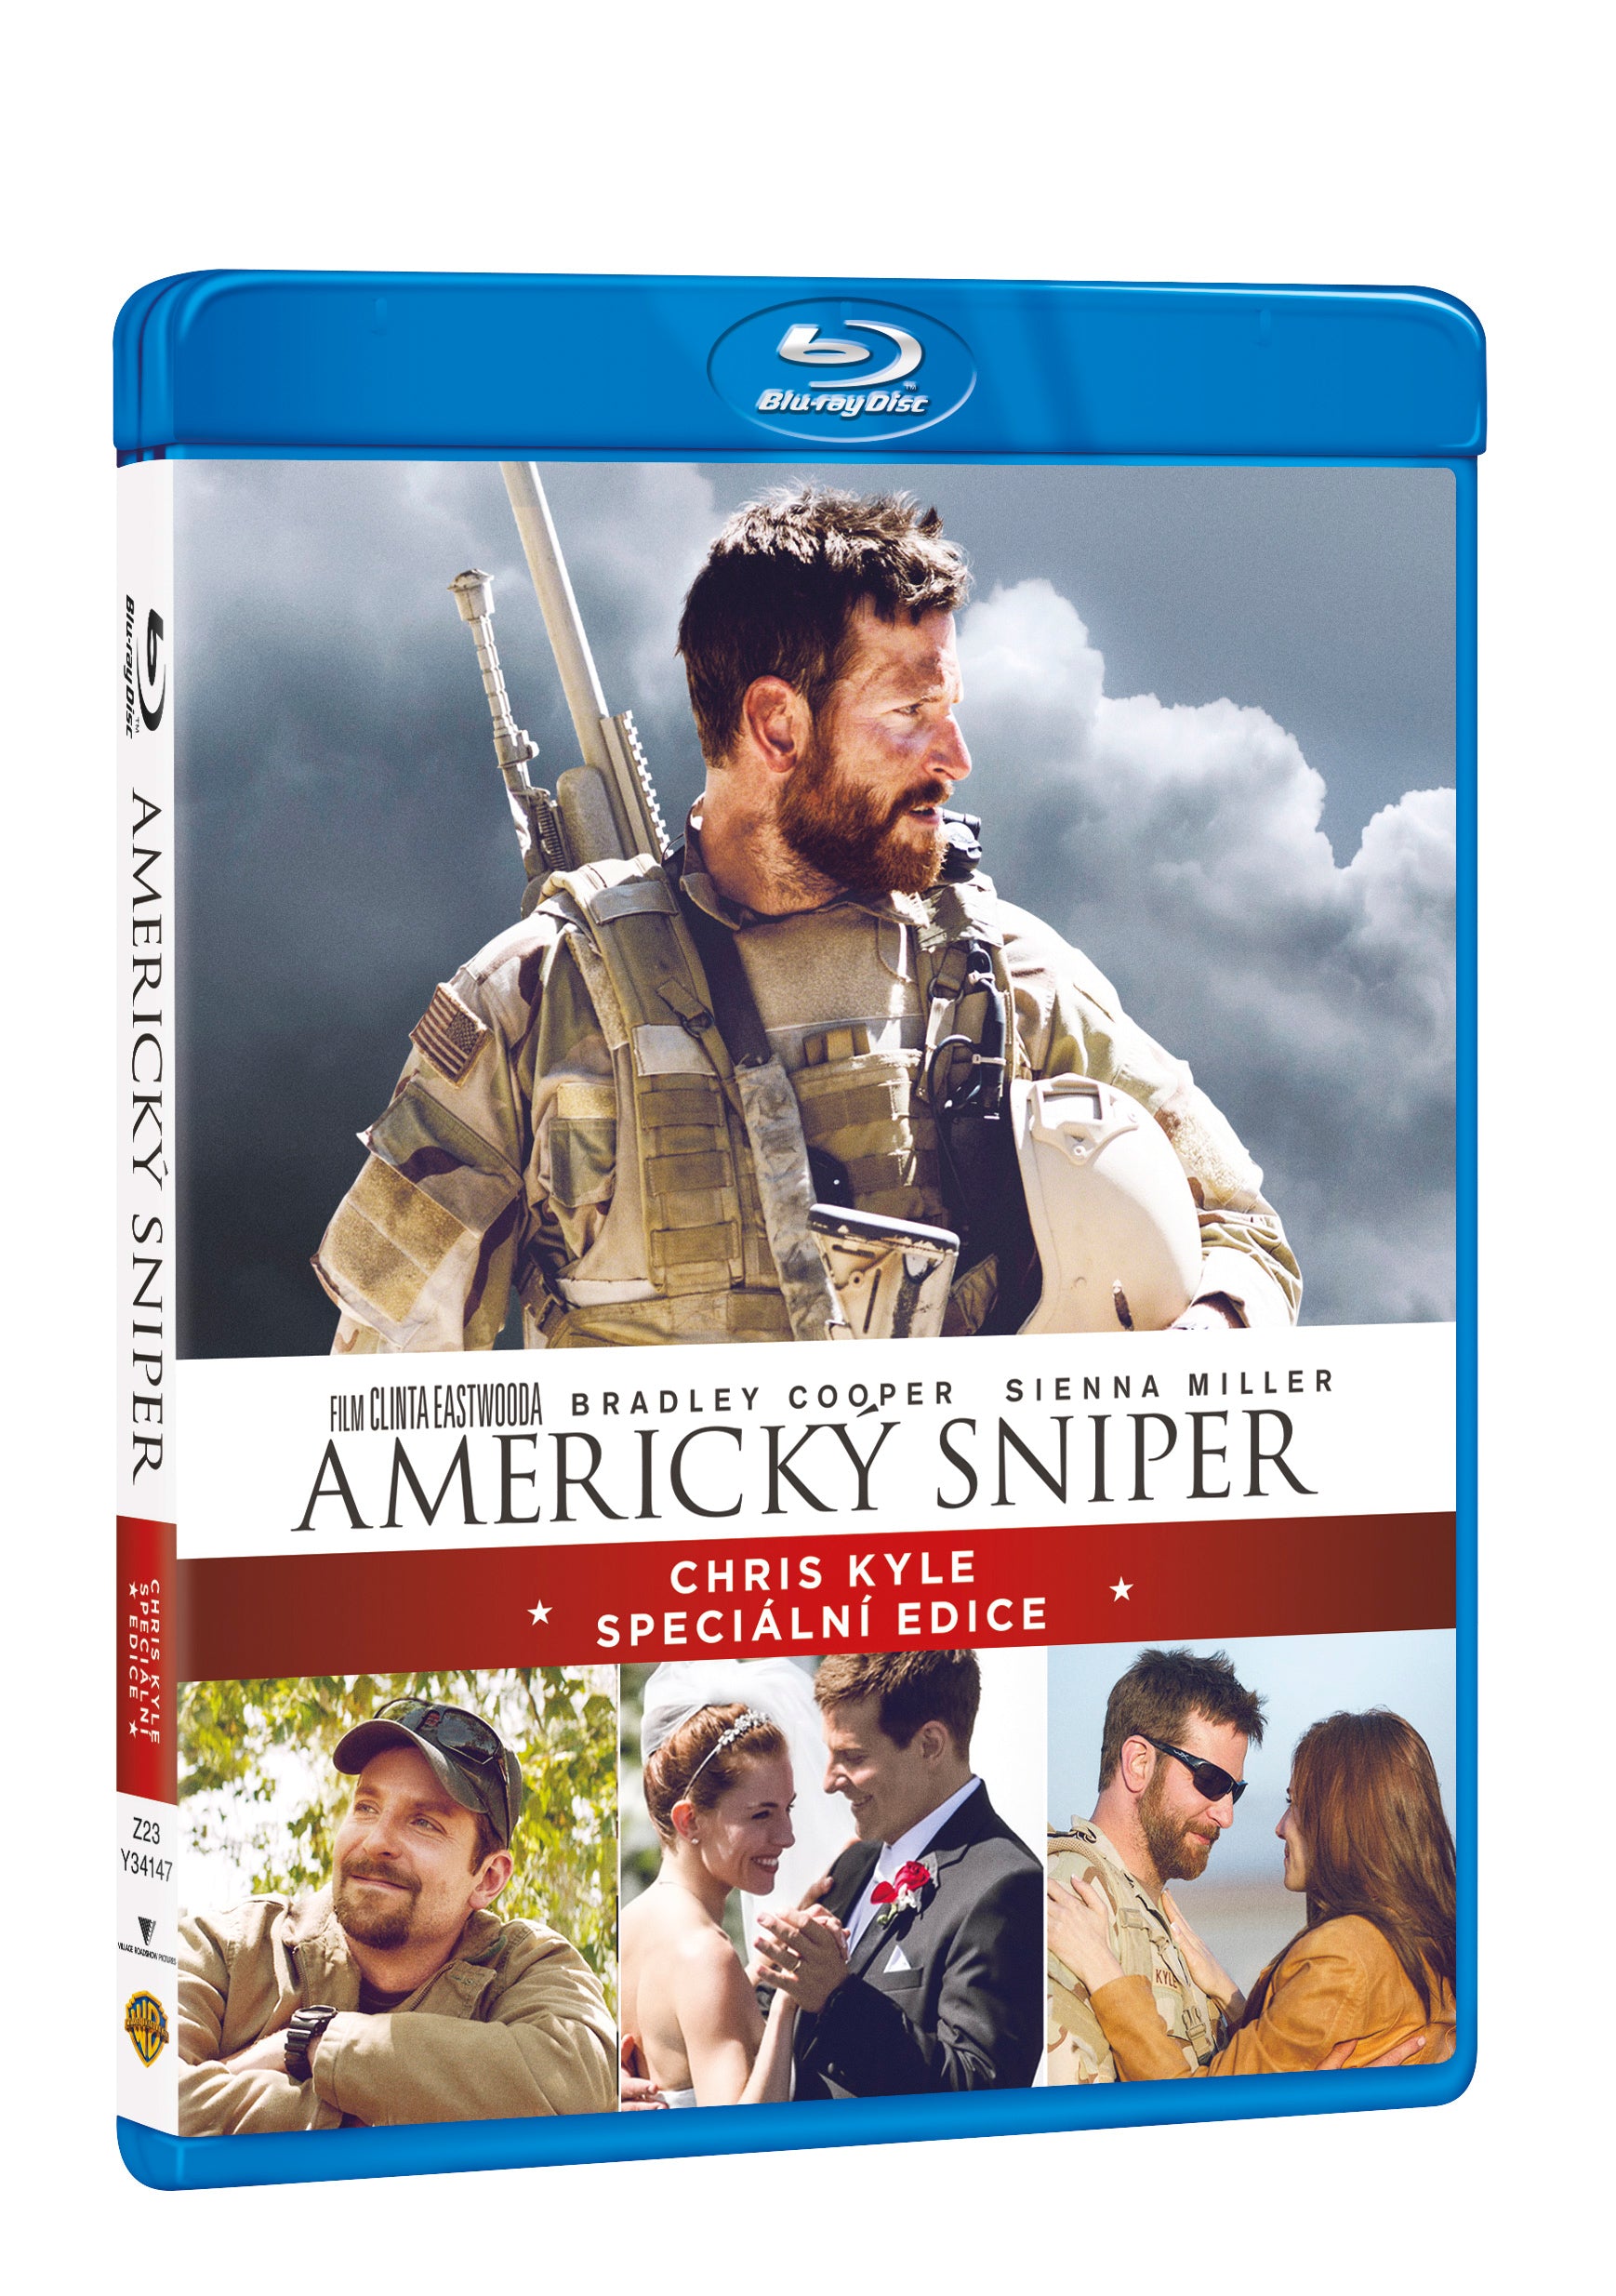 Americky sniper Specialni edice 2BD / American Sniper Special Edition - Czech version